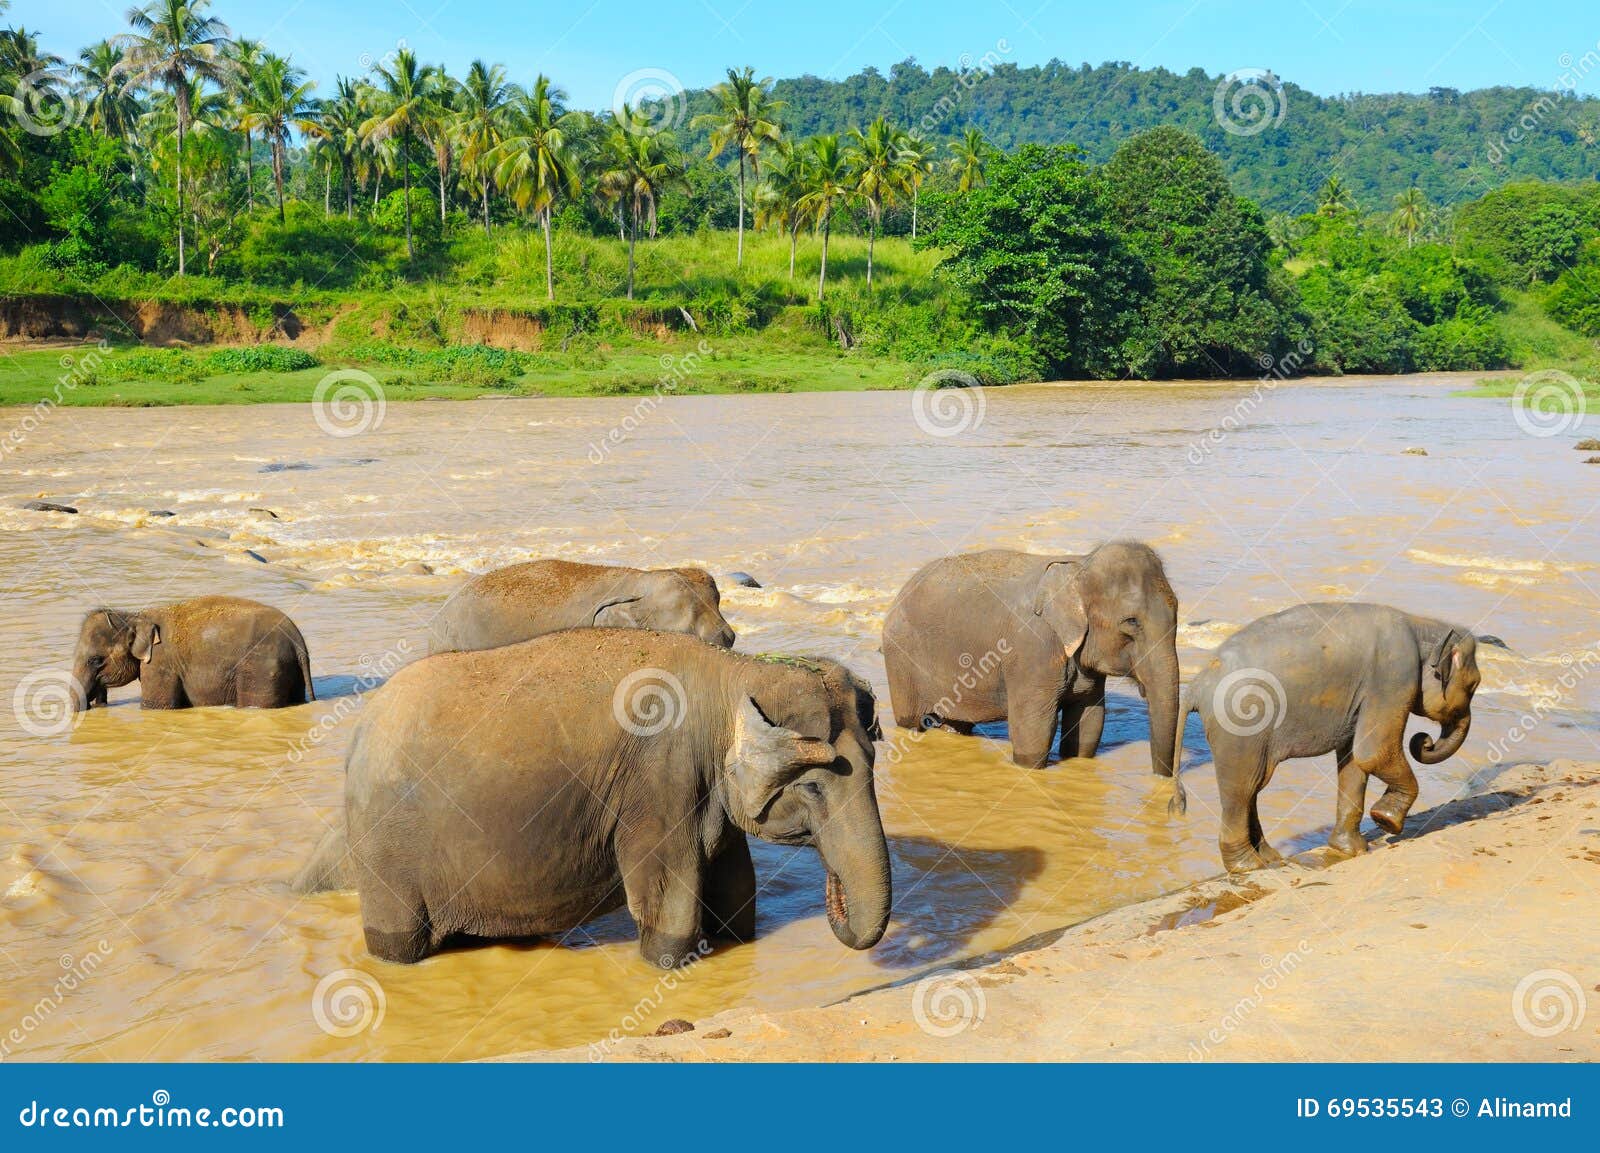 A elephants bathing in the river